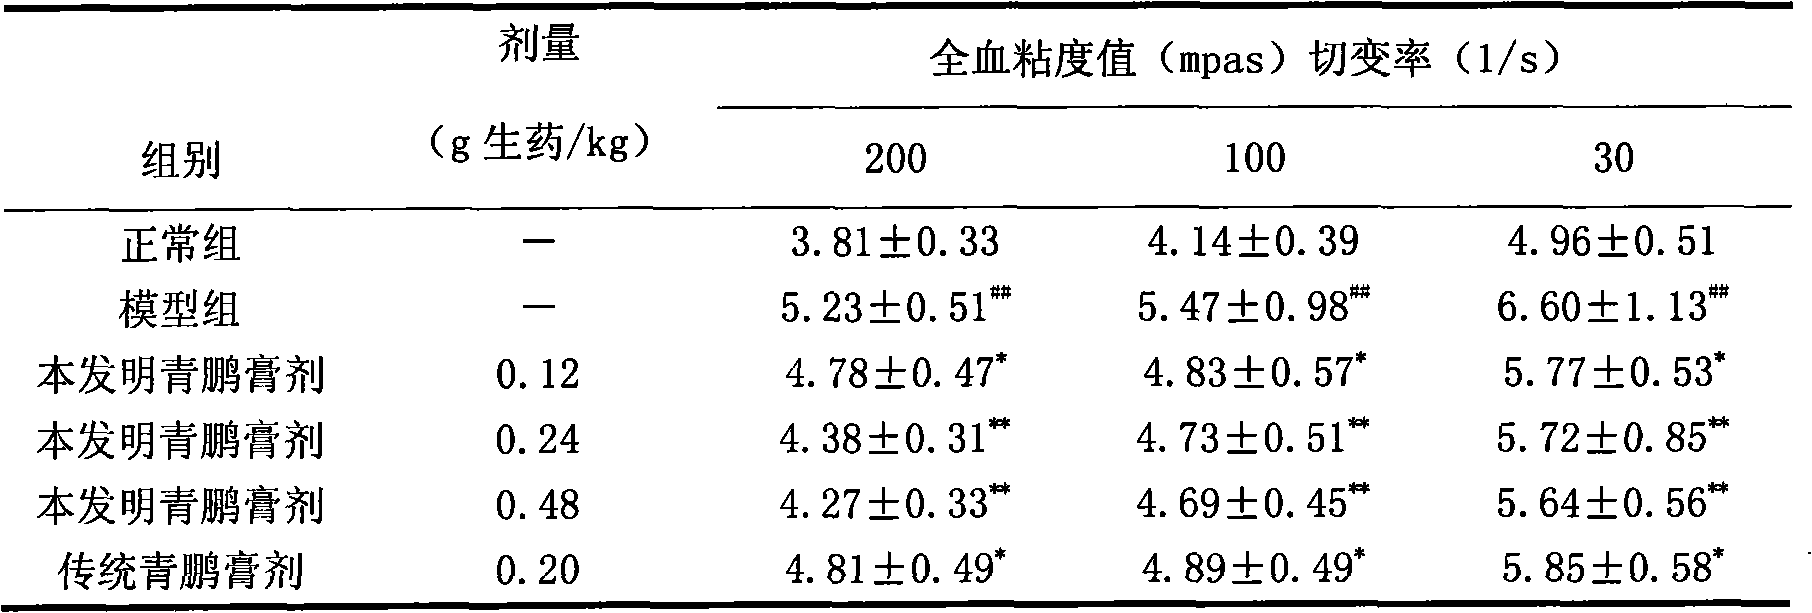 Preparation method of Qingpeng plaster